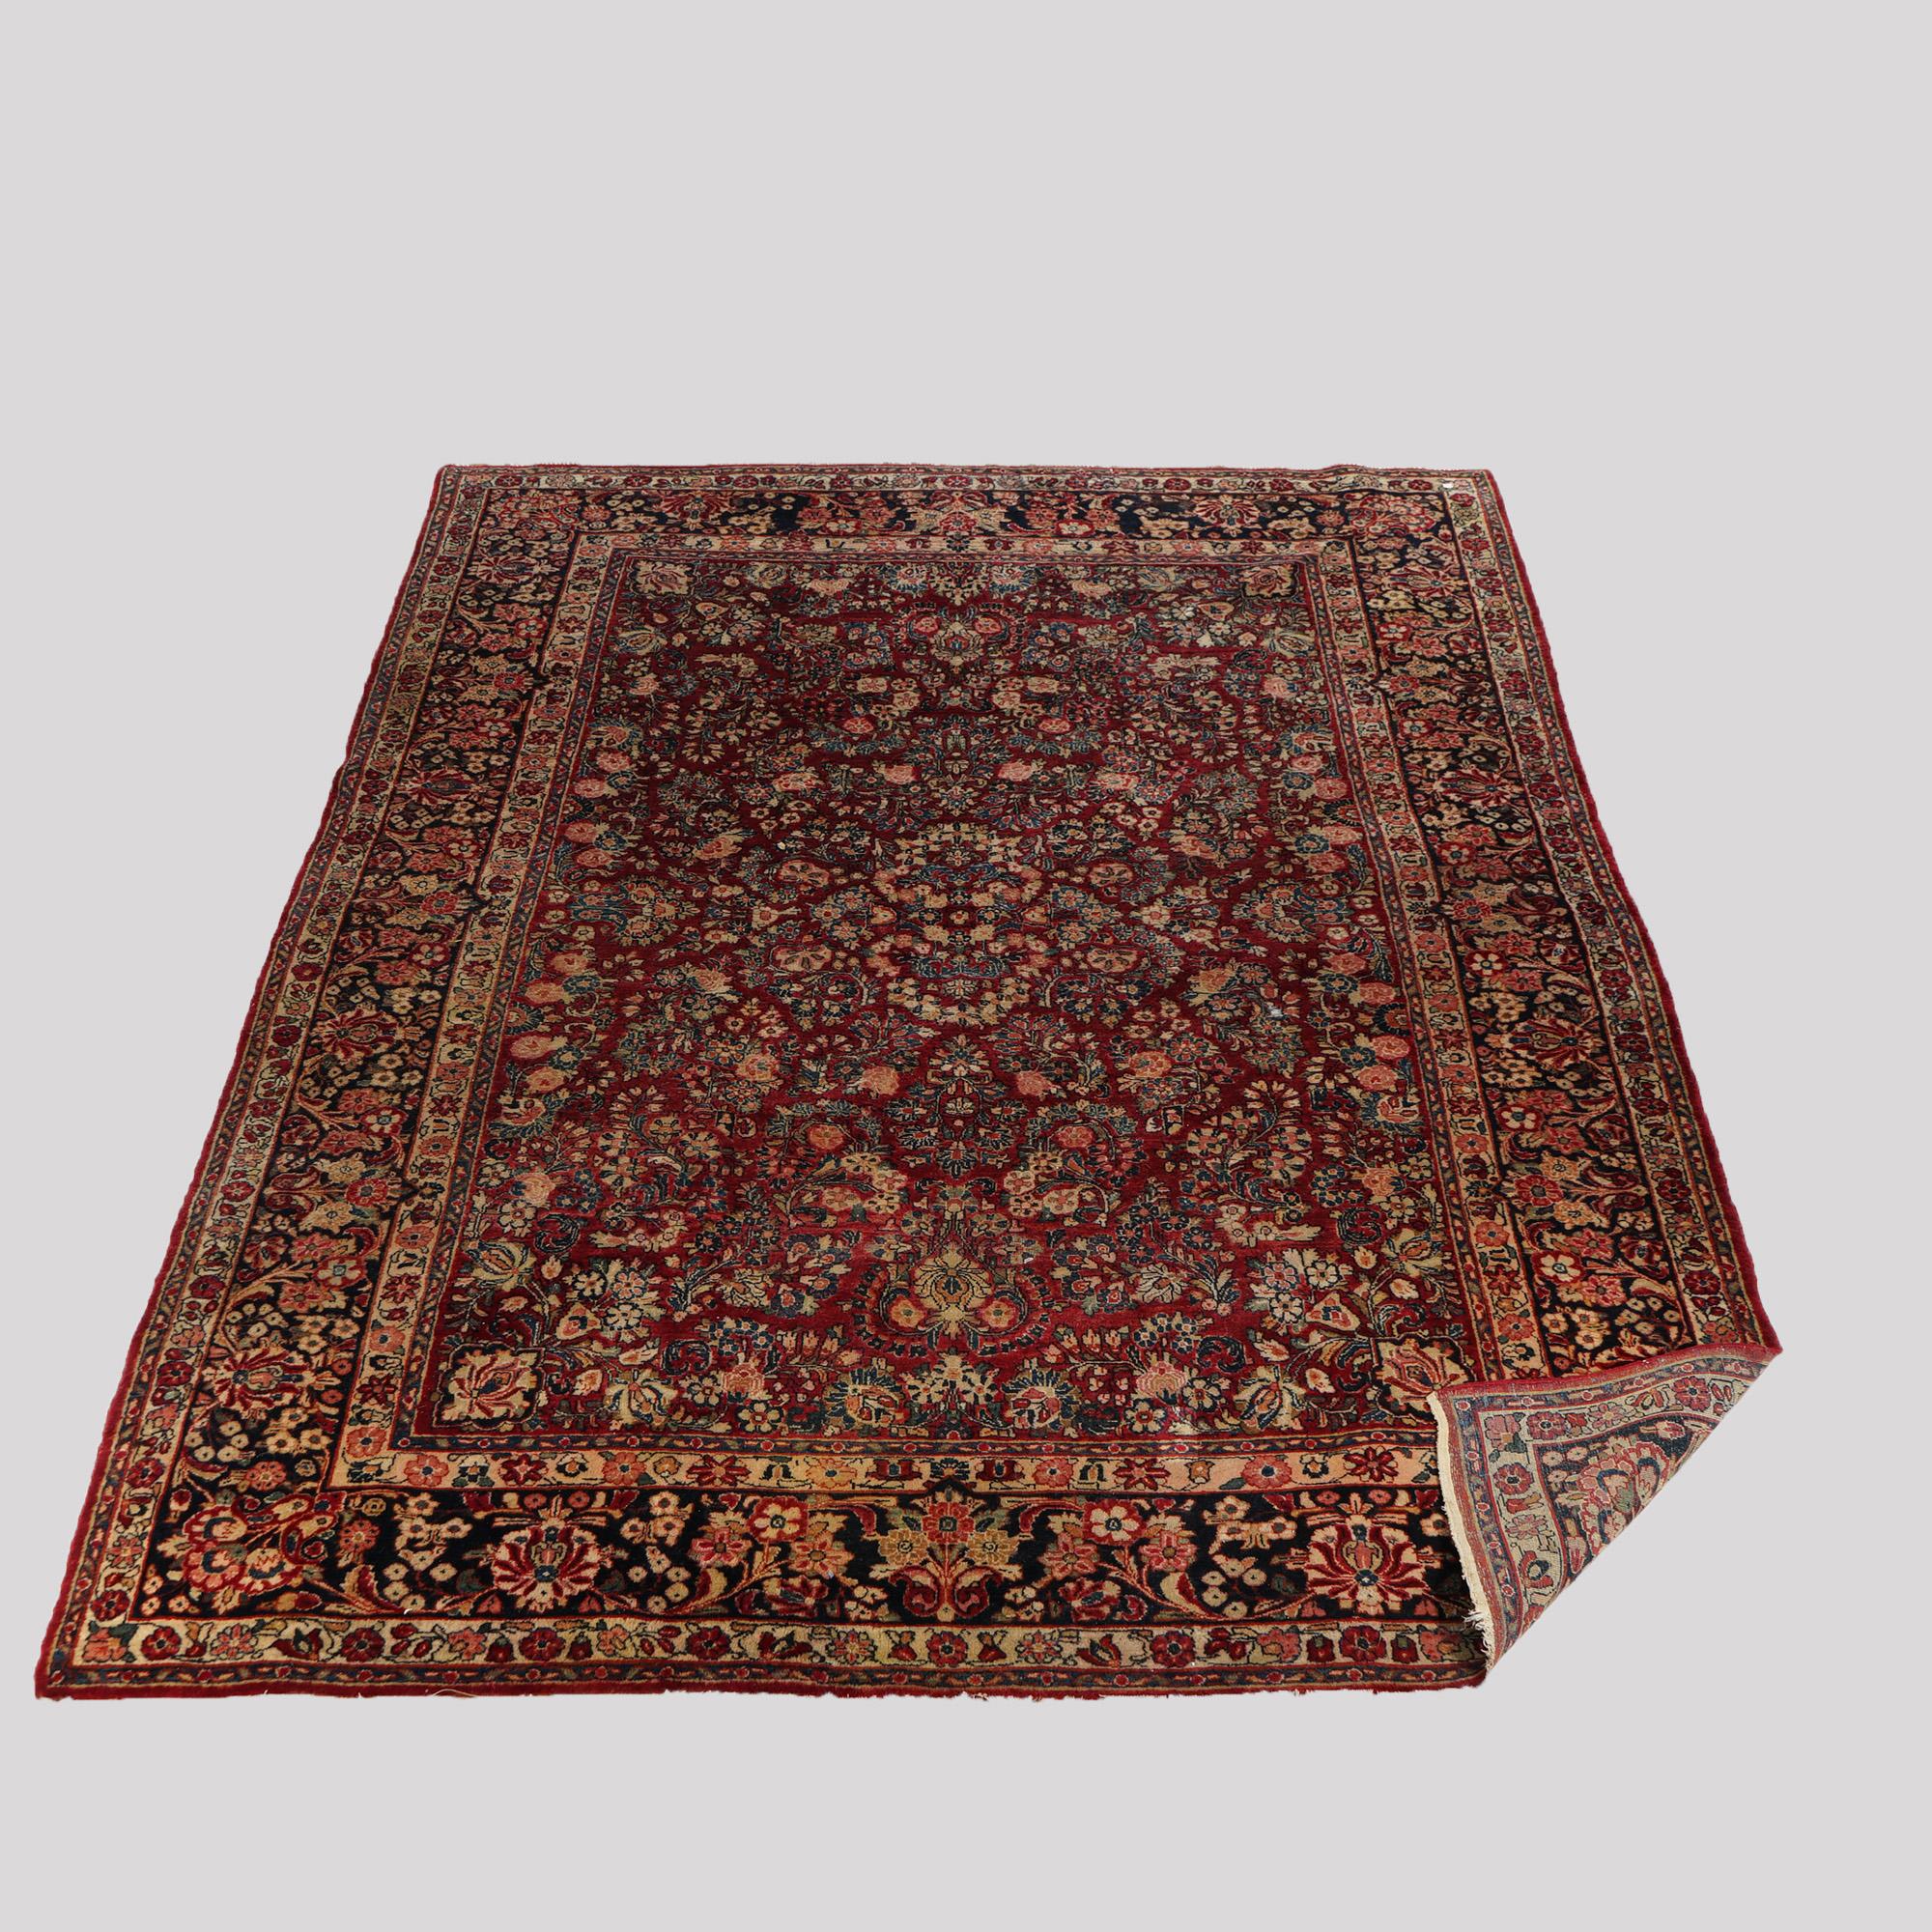 Antique Sarouk Oriental Wool Carpet  9’ X 12’ C1930 For Sale 9